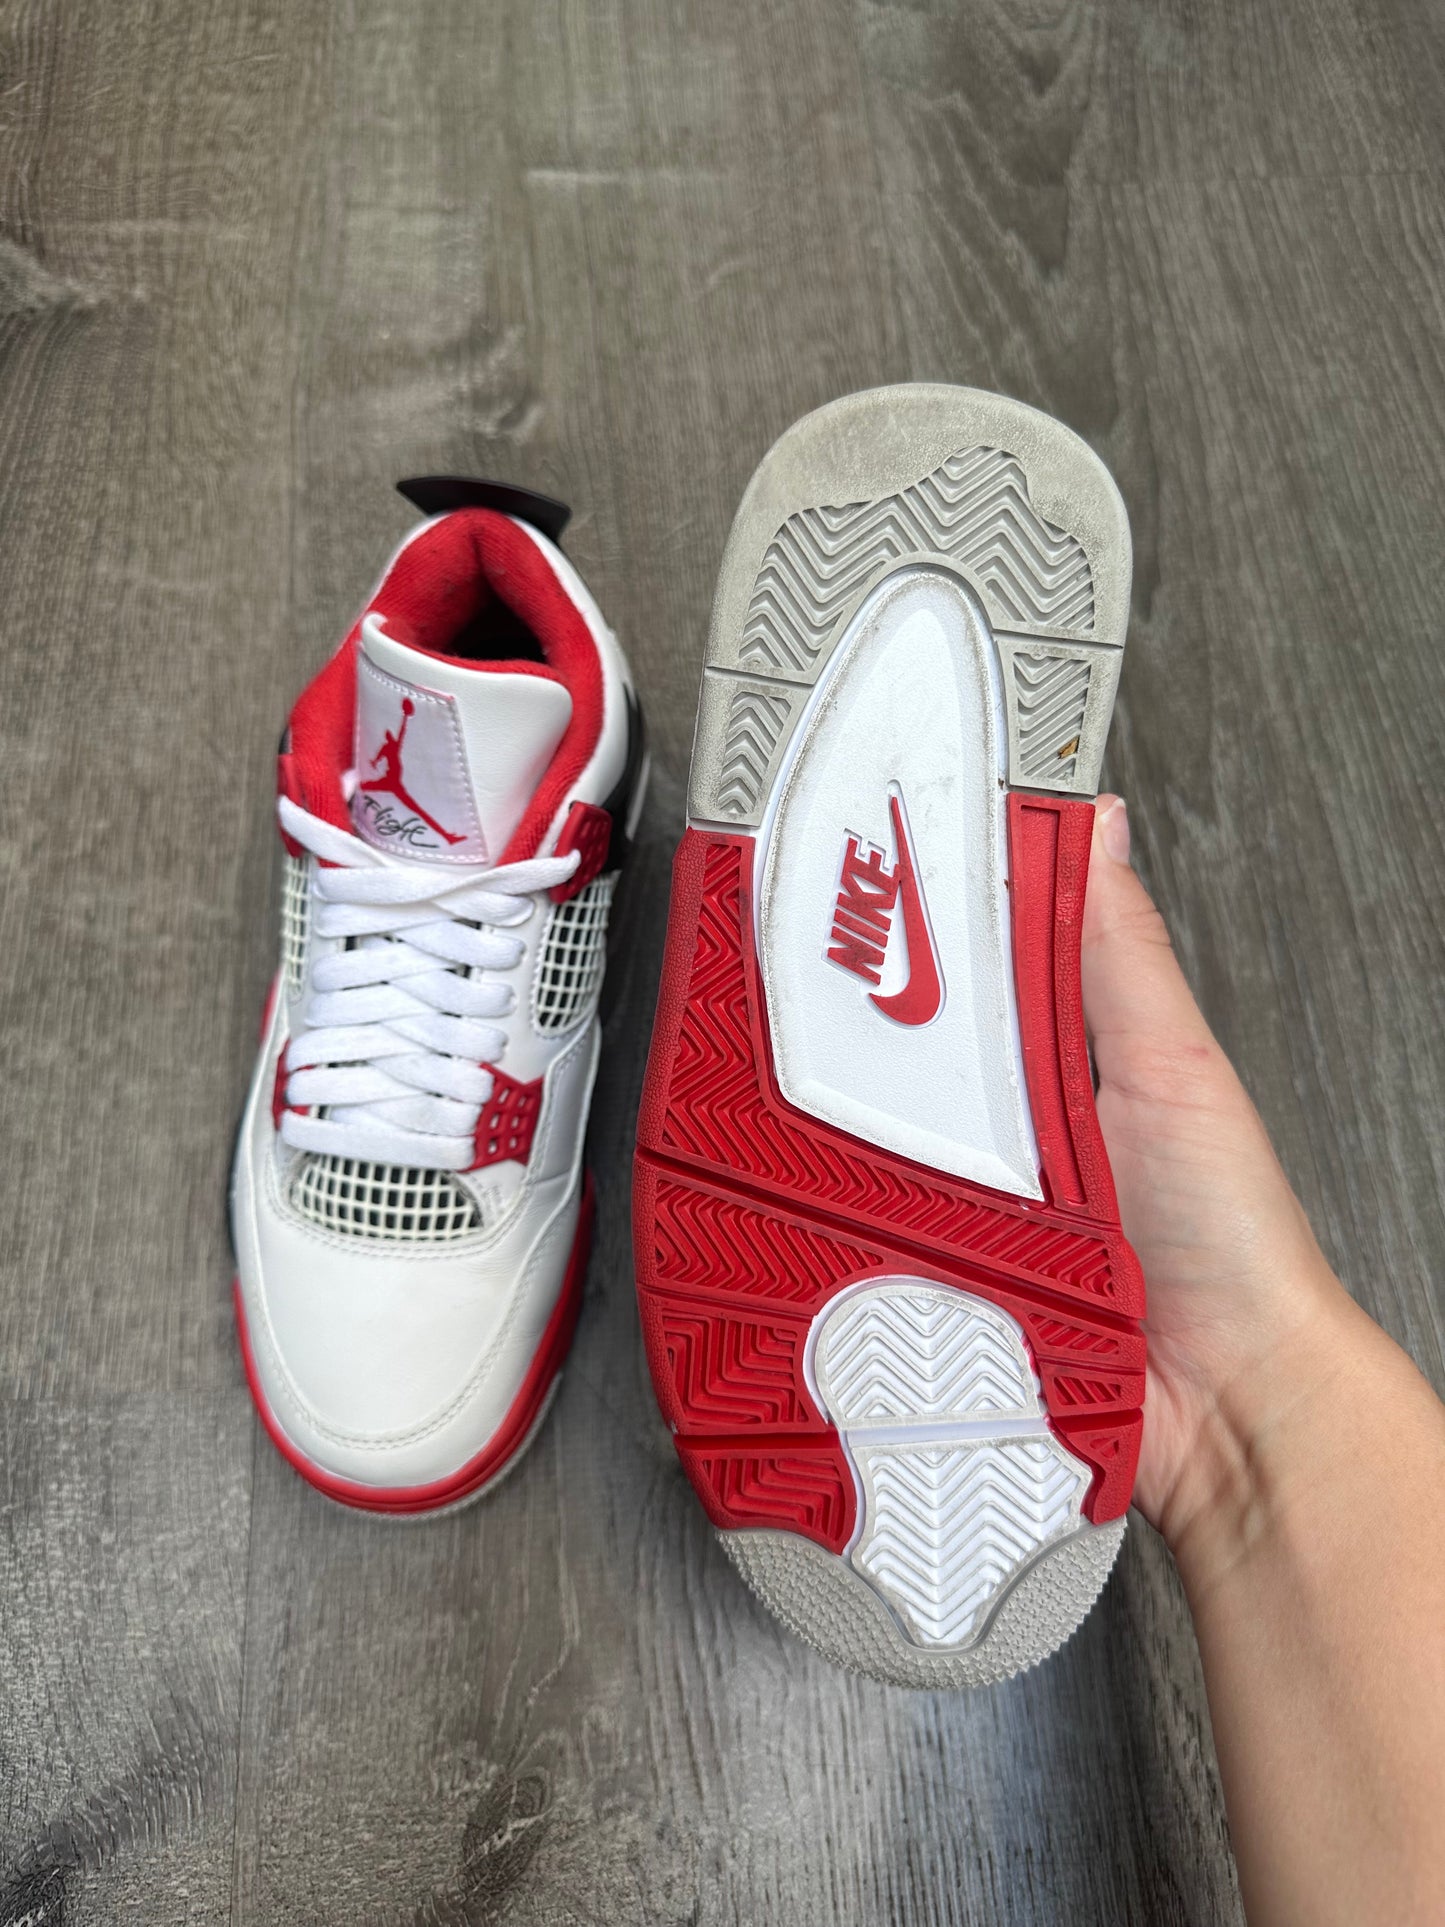 Jordan 4 Retro Fire Red (Preowned)